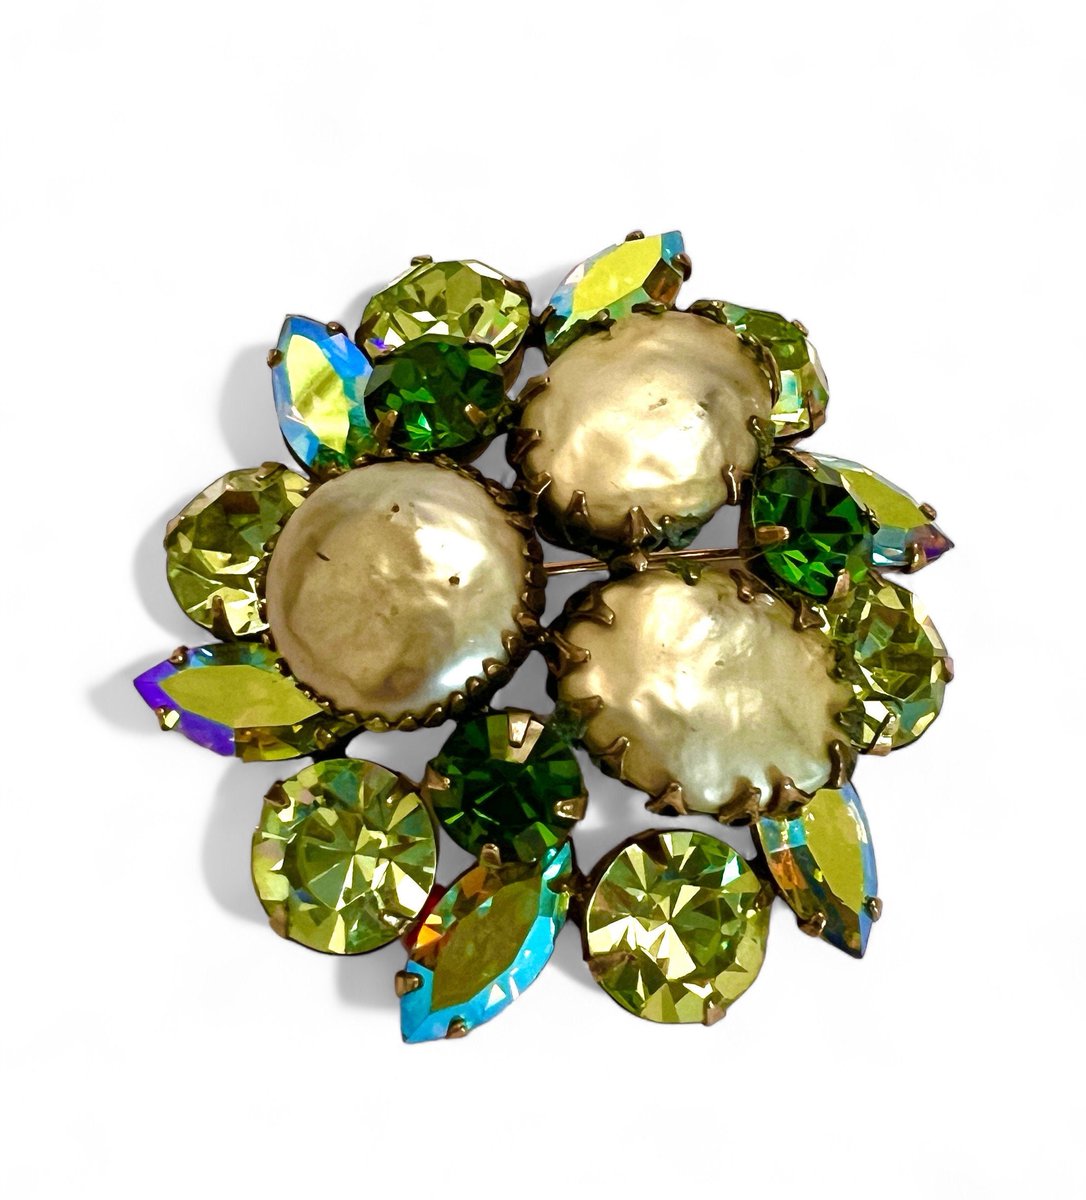 Signed Regency Shades of Green Brooch Faux Baroque Pearls Gold Tone Metal 1950s Gift for Her #SignedRegency #RegencyBrooch $125.00 ➤ etsy.com/listing/172775…